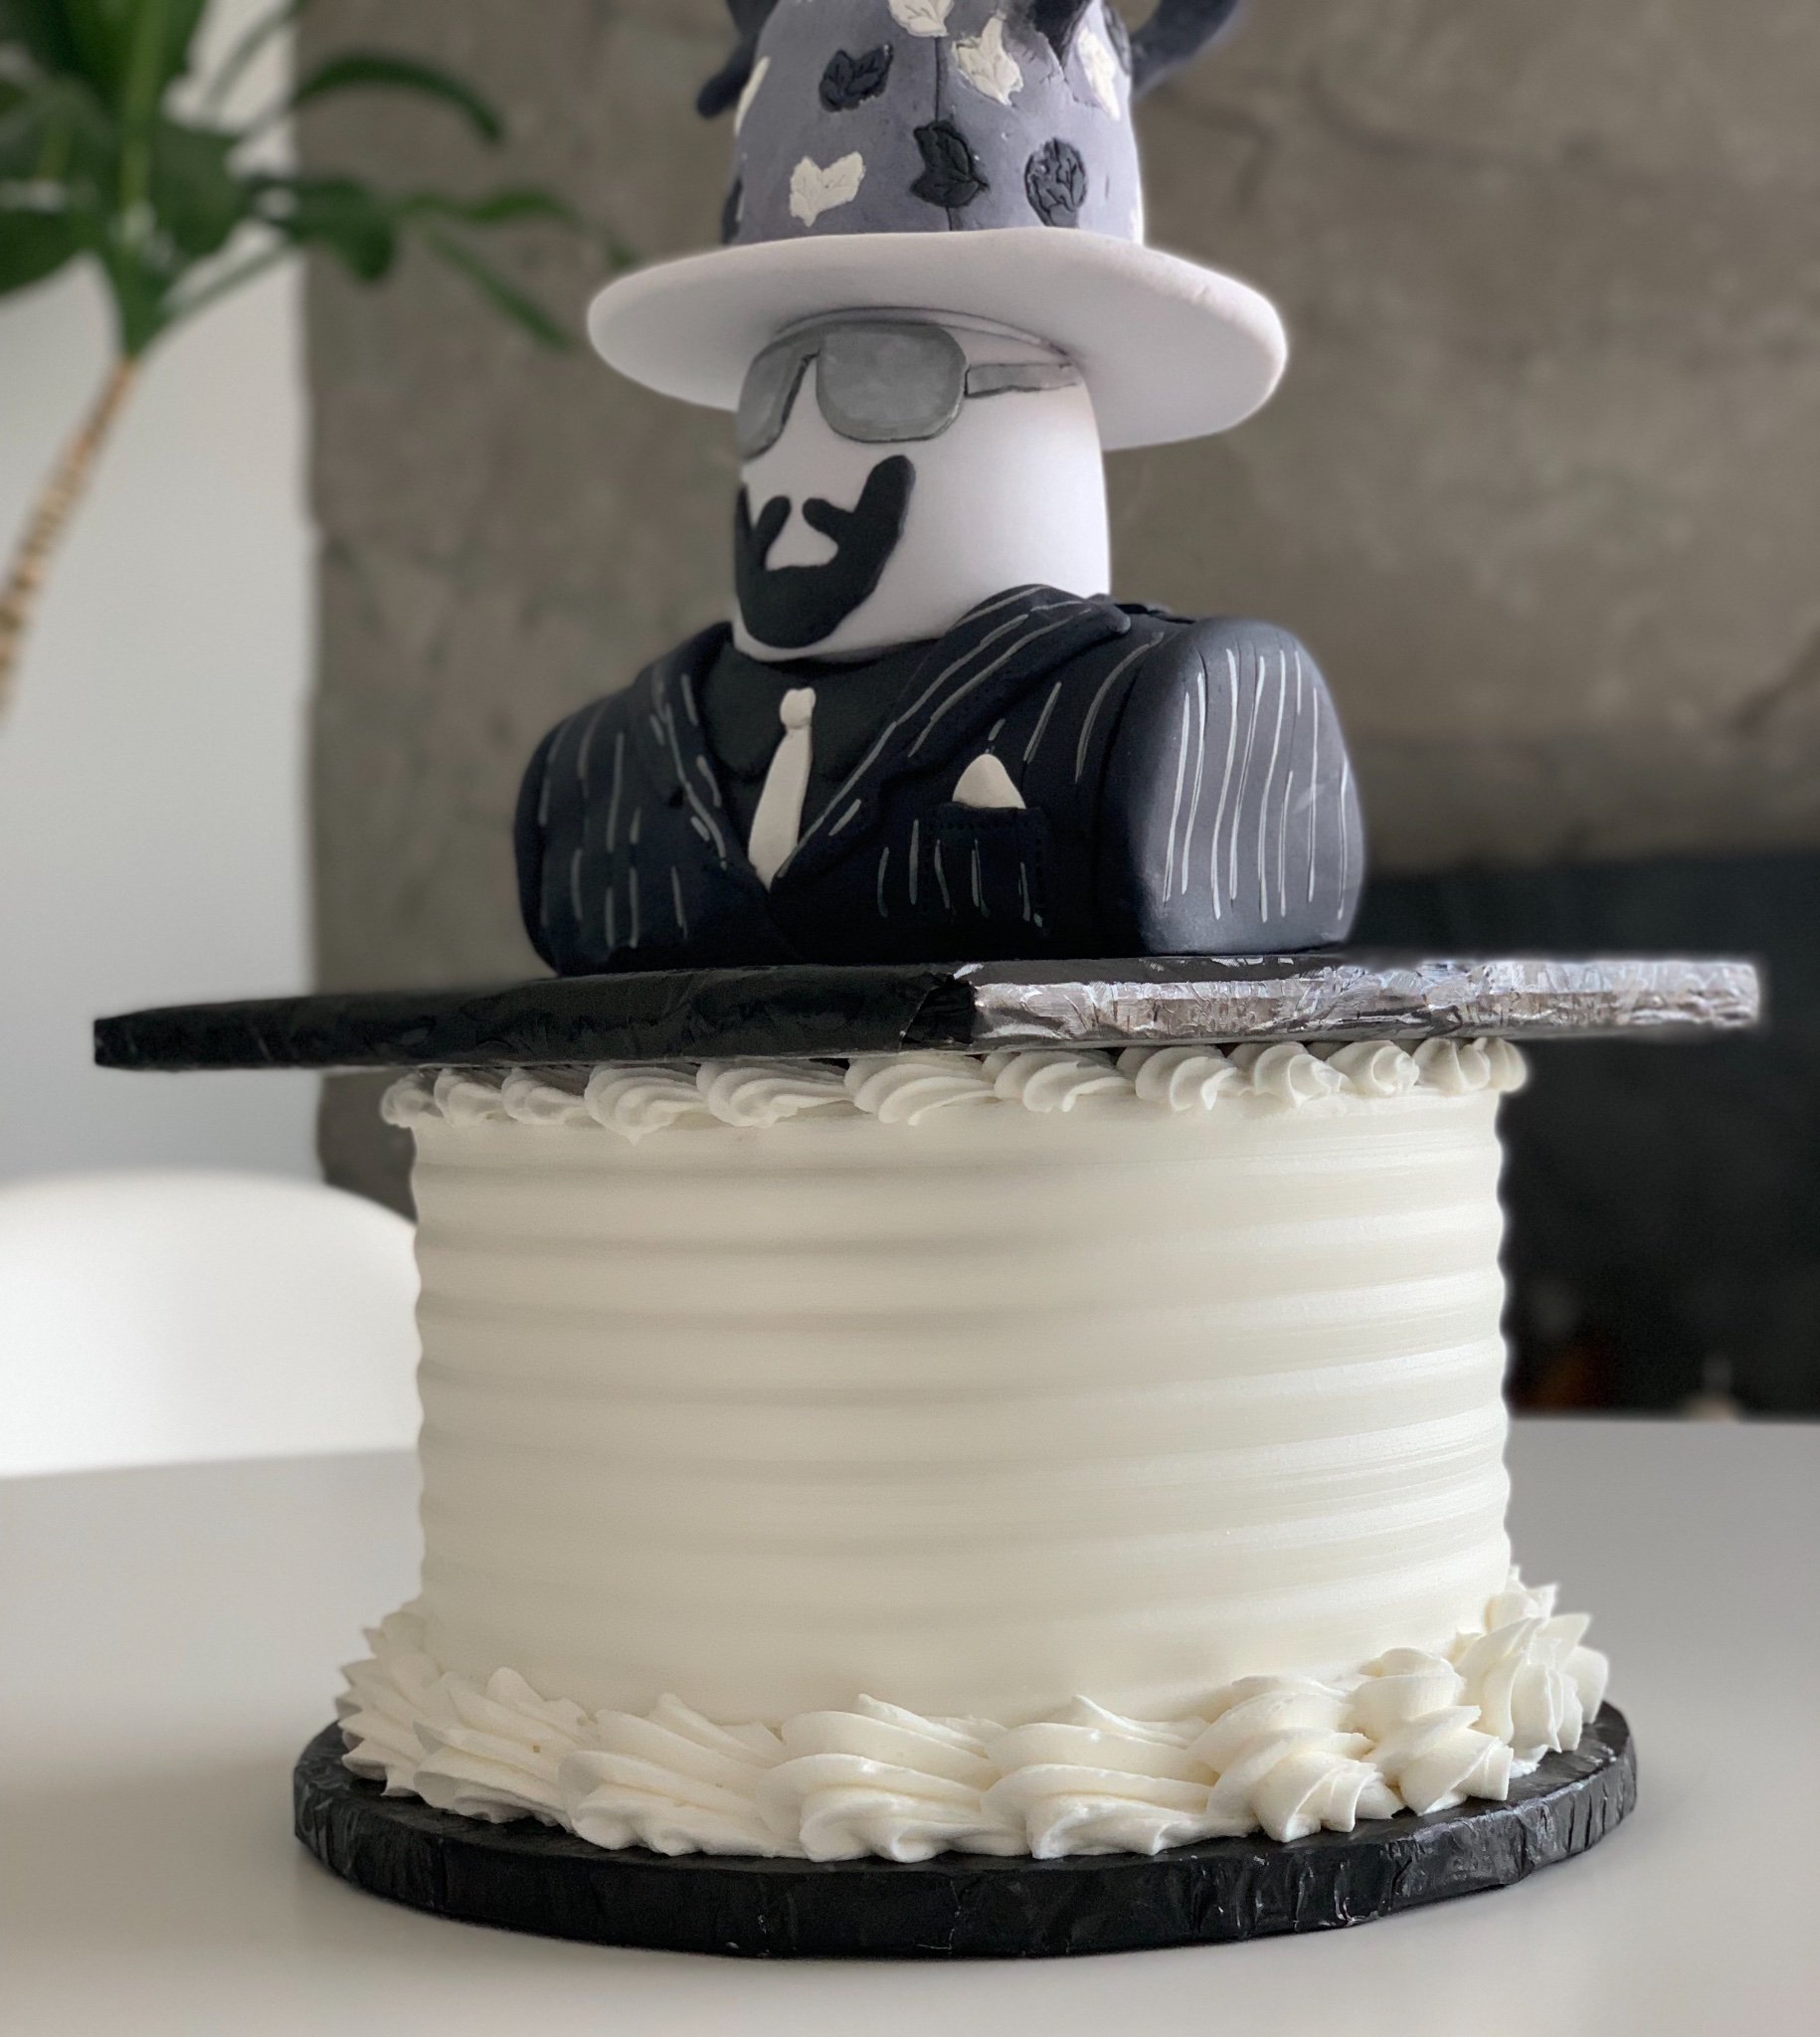 Asimo3089 On Twitter Best Cake Ever Roblox - birthday cake roblox jailbreak cake